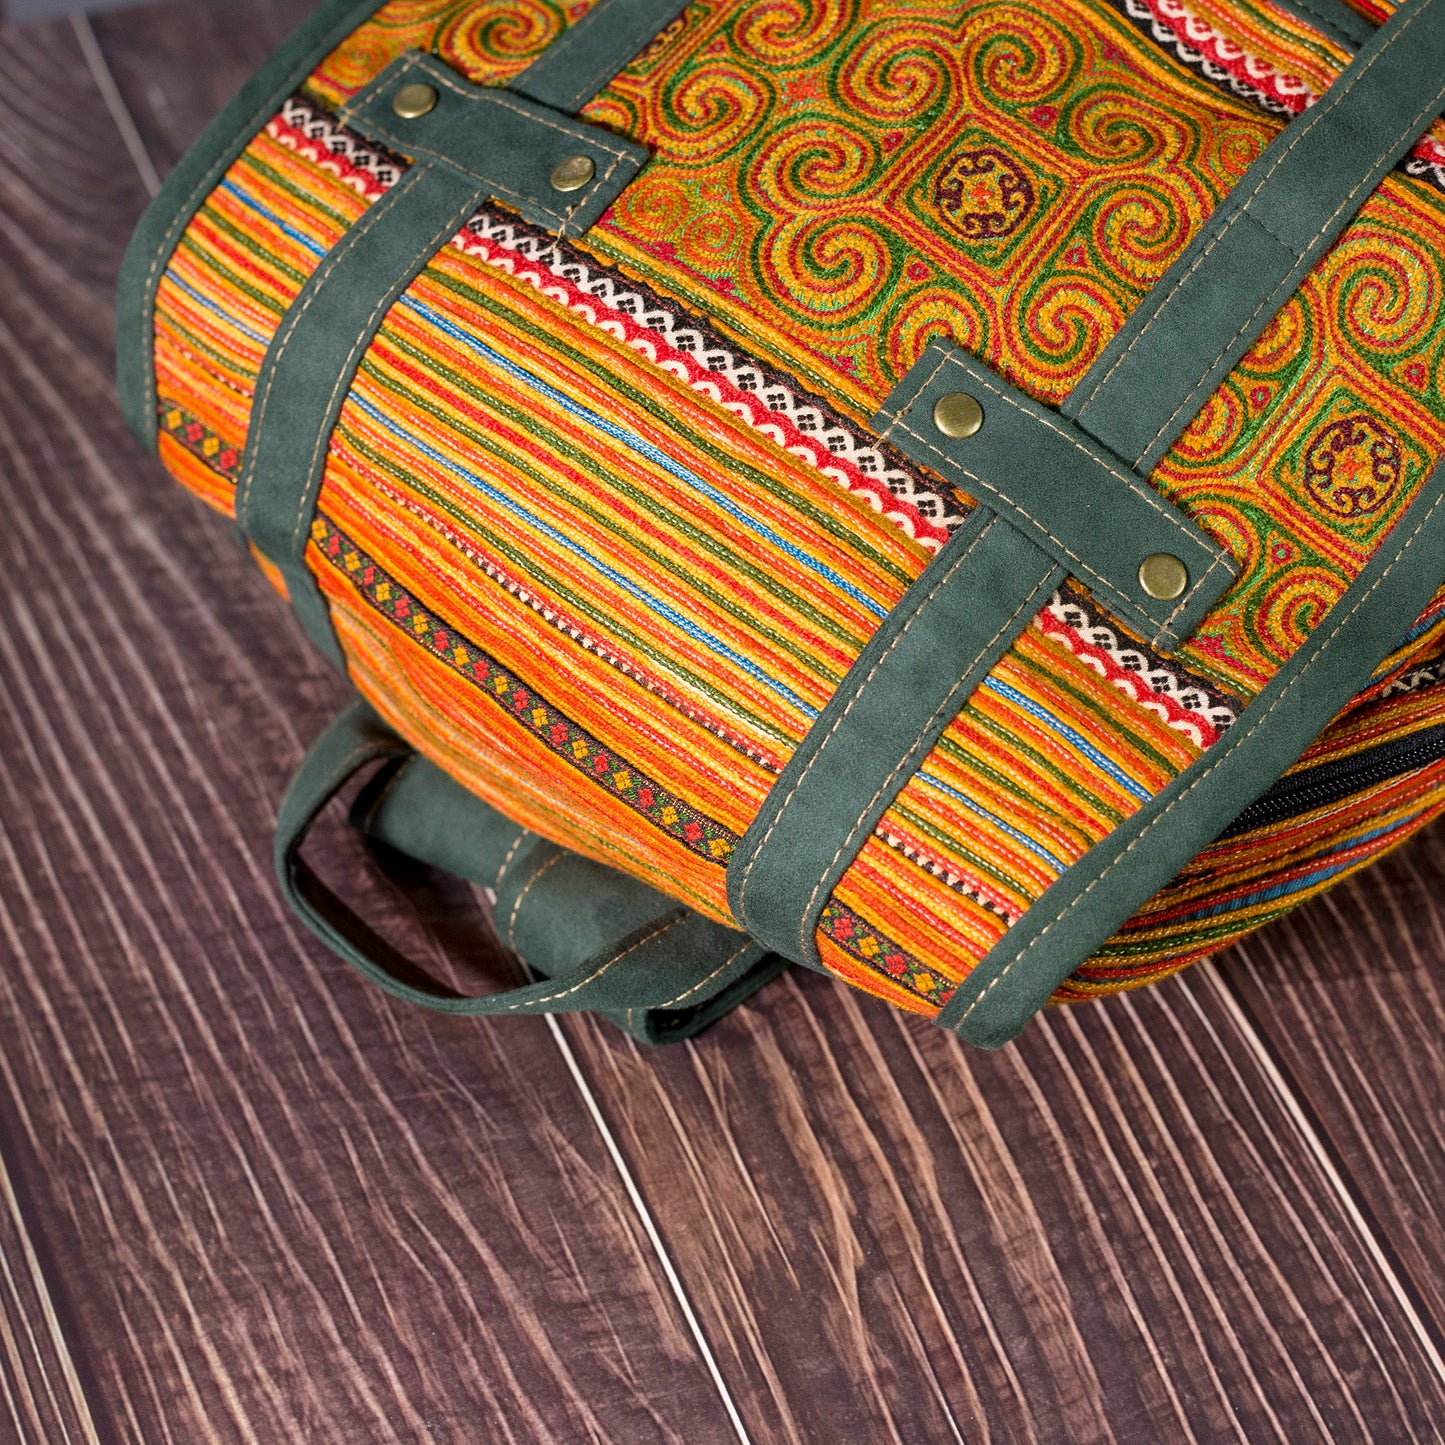 Stor ryggsäck, orange handbroderityg, konstläderkant, mossgrön färg